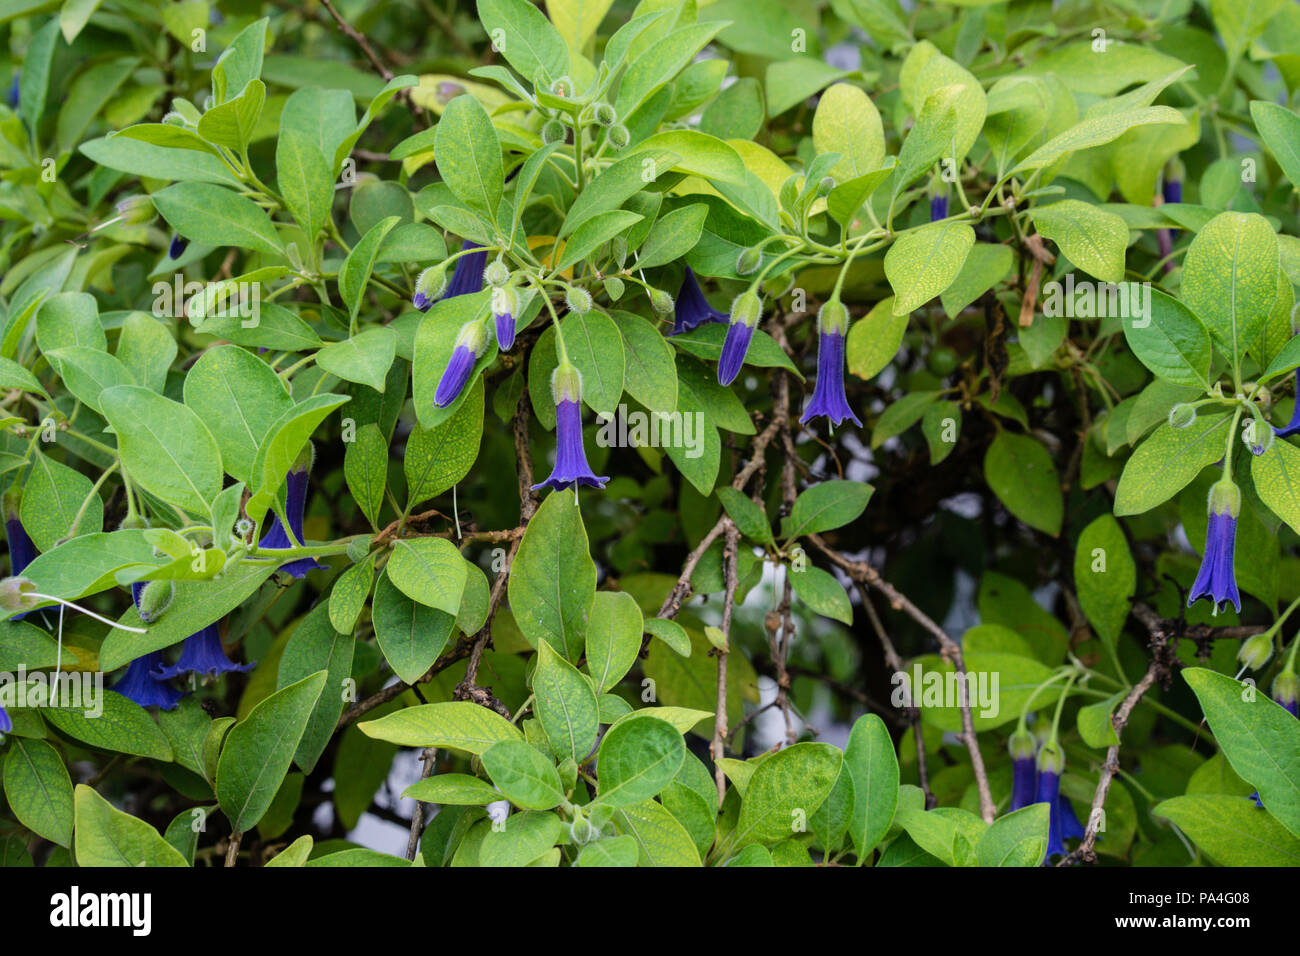 acnistus solanaceae australian plant blooming in garden Stock Photo